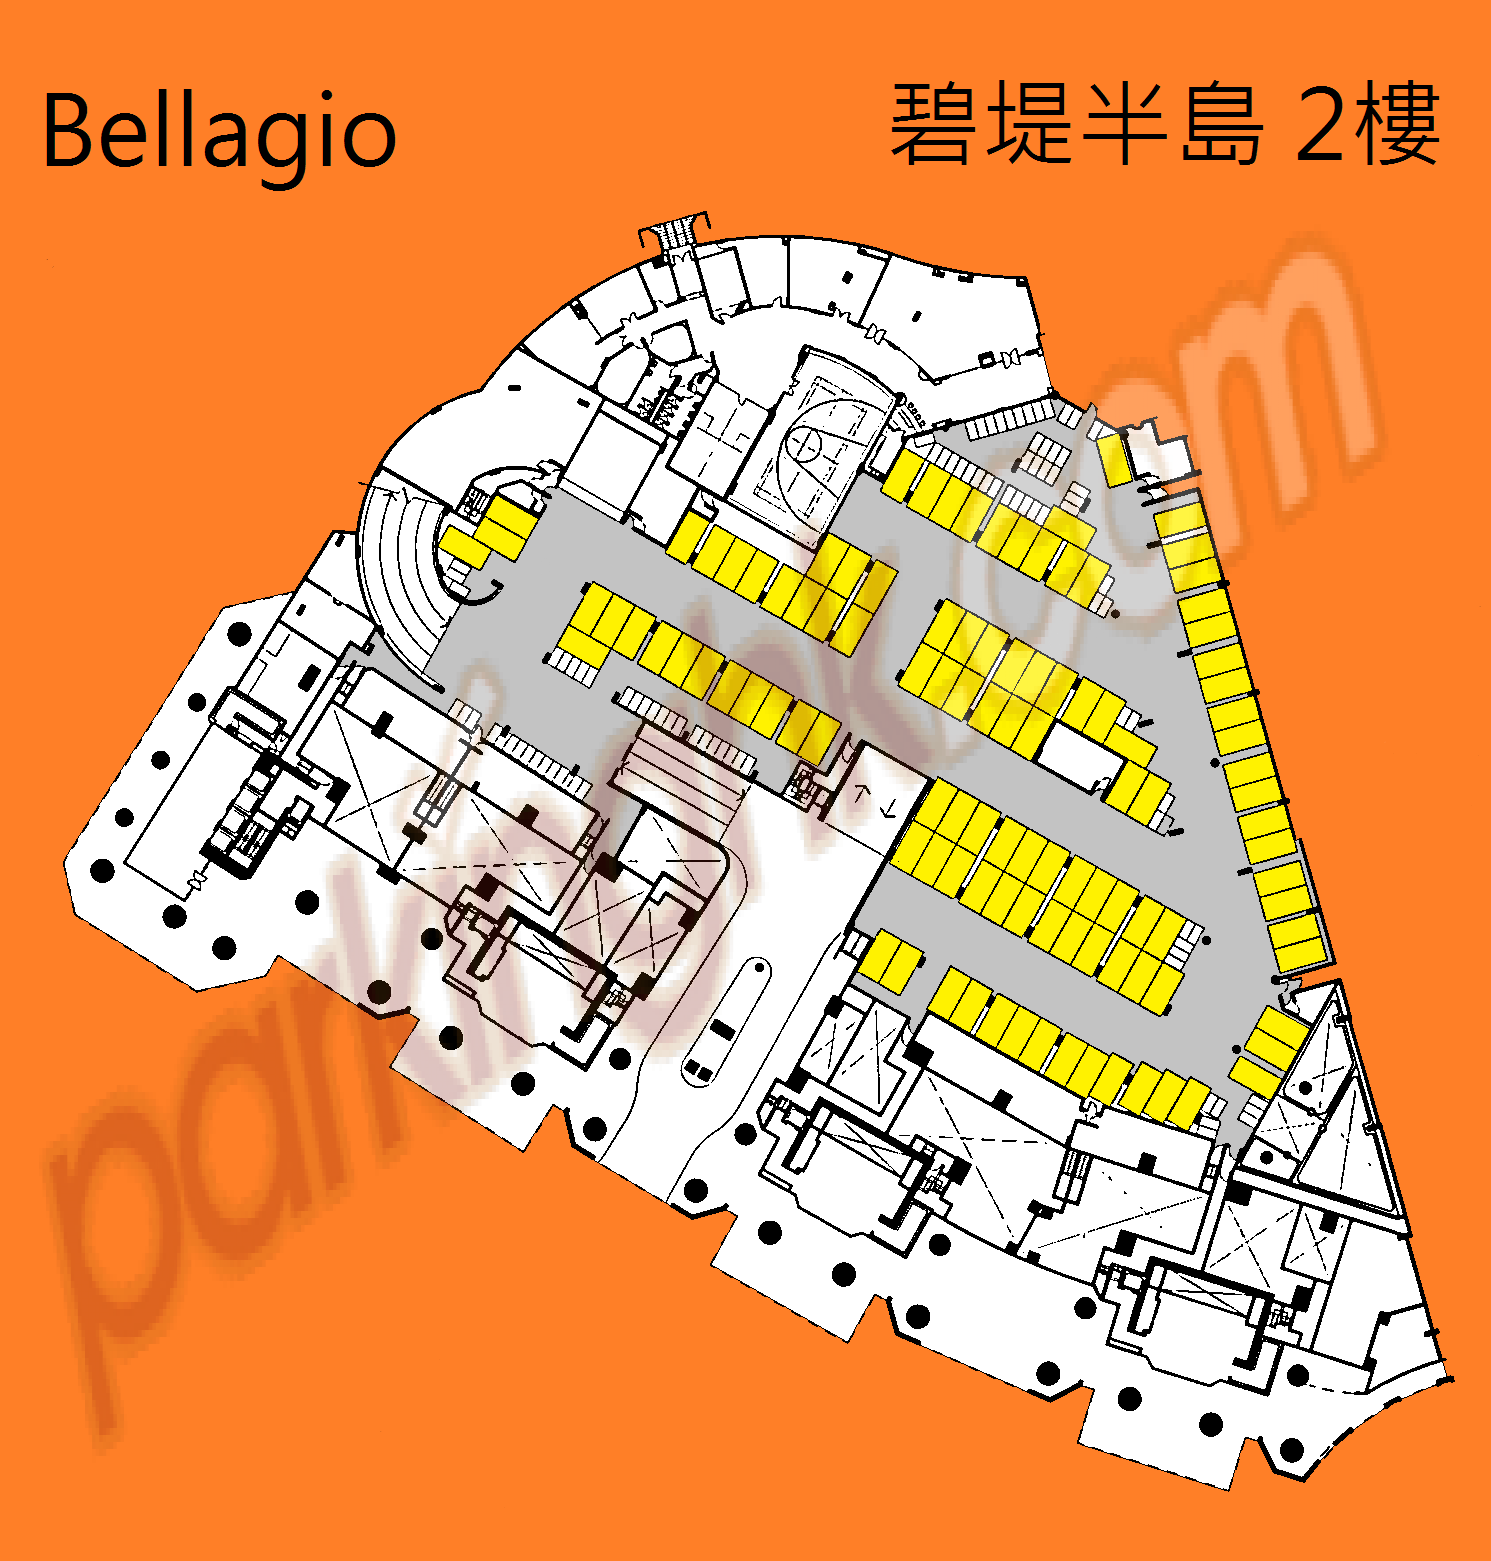  Sham Cheng Carpark  Castle Peak Road - Sham Tseng  Bellagio Plase 2  Floor plan 香港車位.com ParkingHK.com